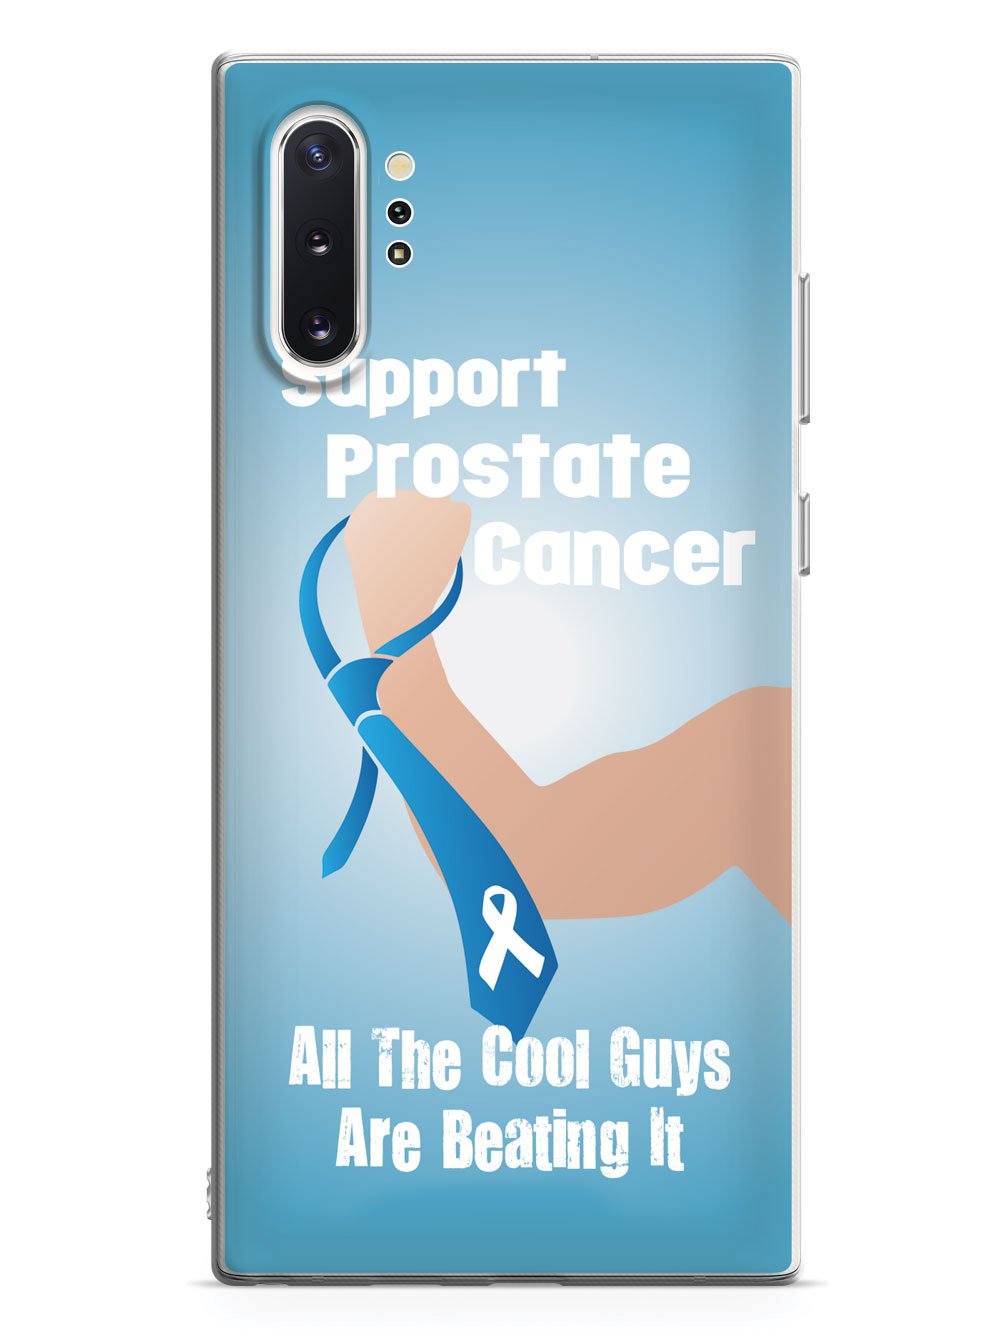 Support Prostate Cancer Awareness Case